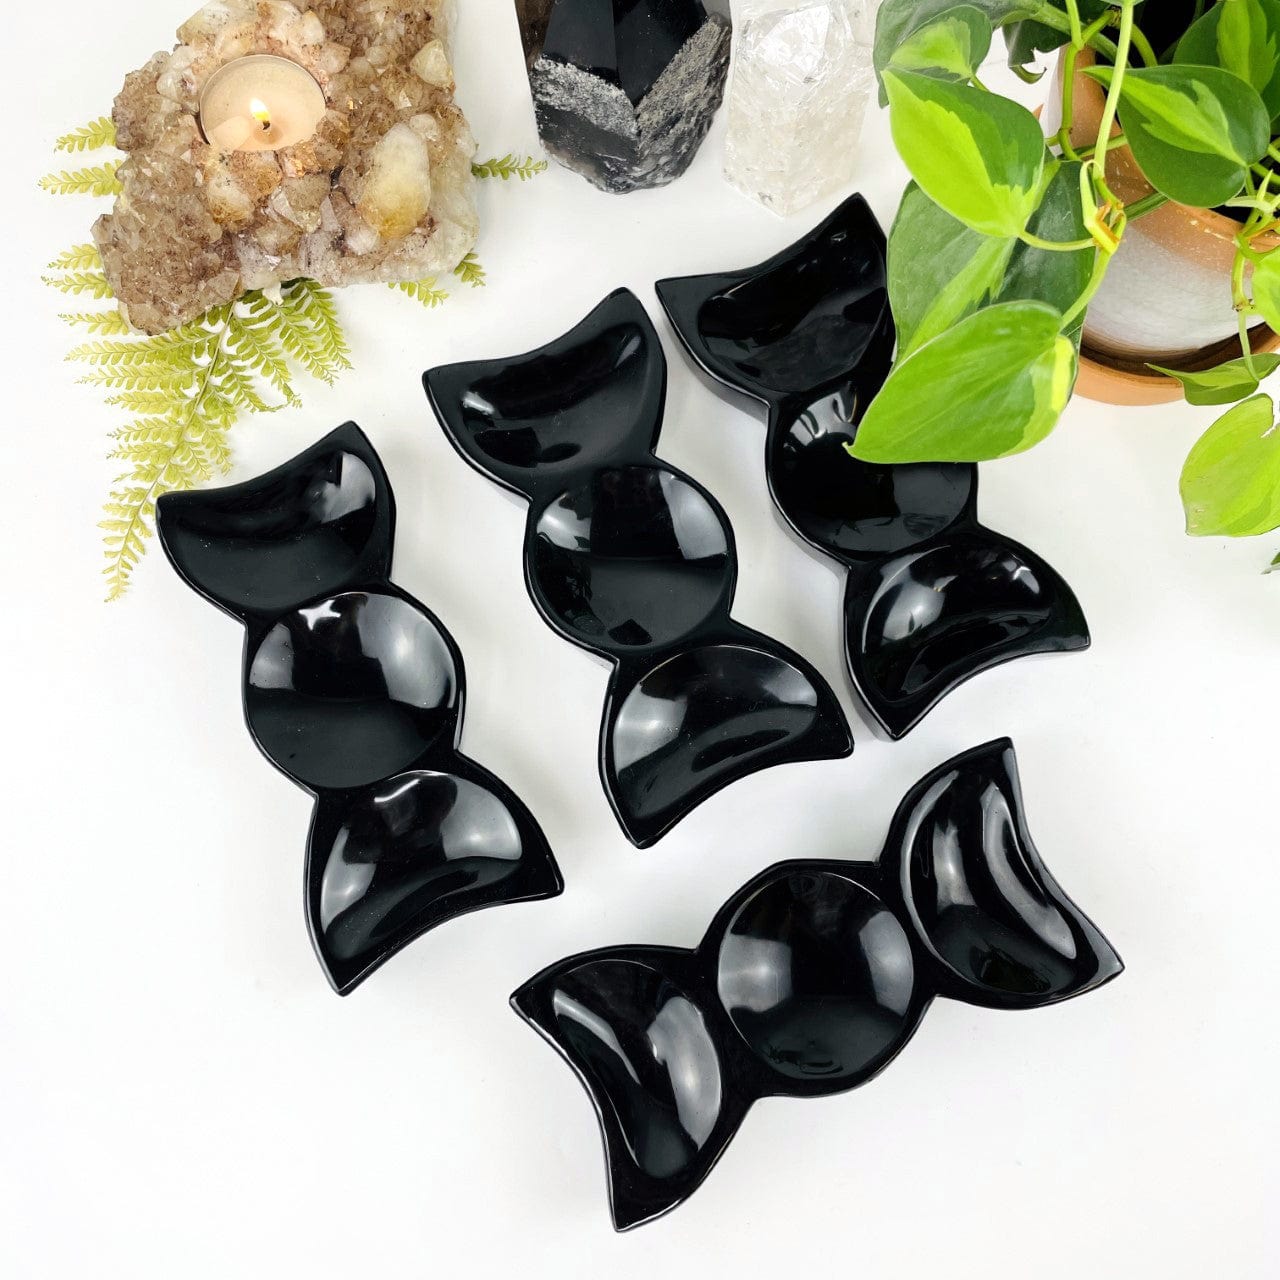 4 Stone Triple Moon Goddess Bowls in black obsidian